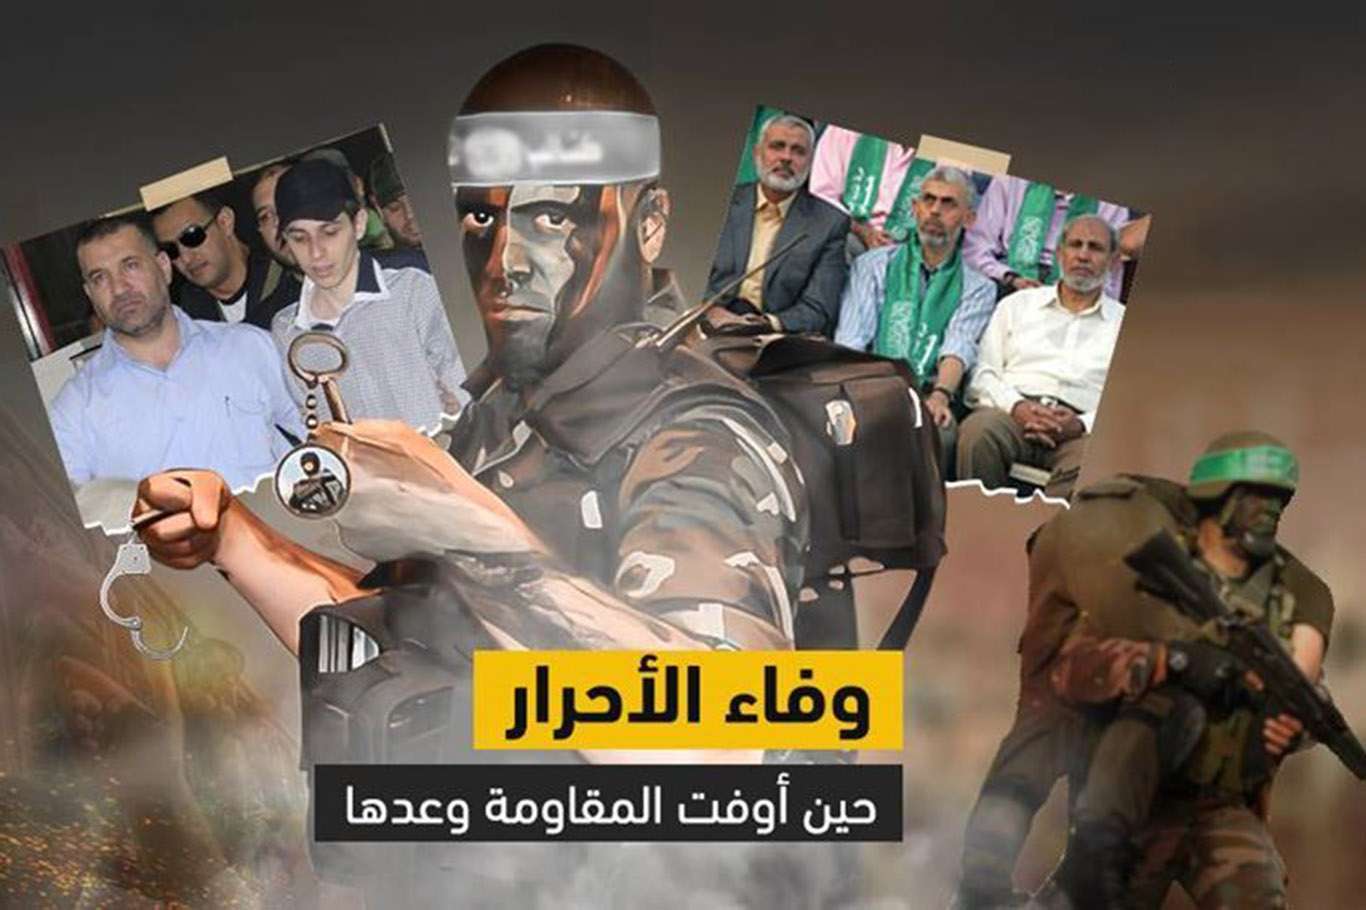 HAMAS releases a statement regarding the 9th anniversary of the Wafa al-Ahrar deal